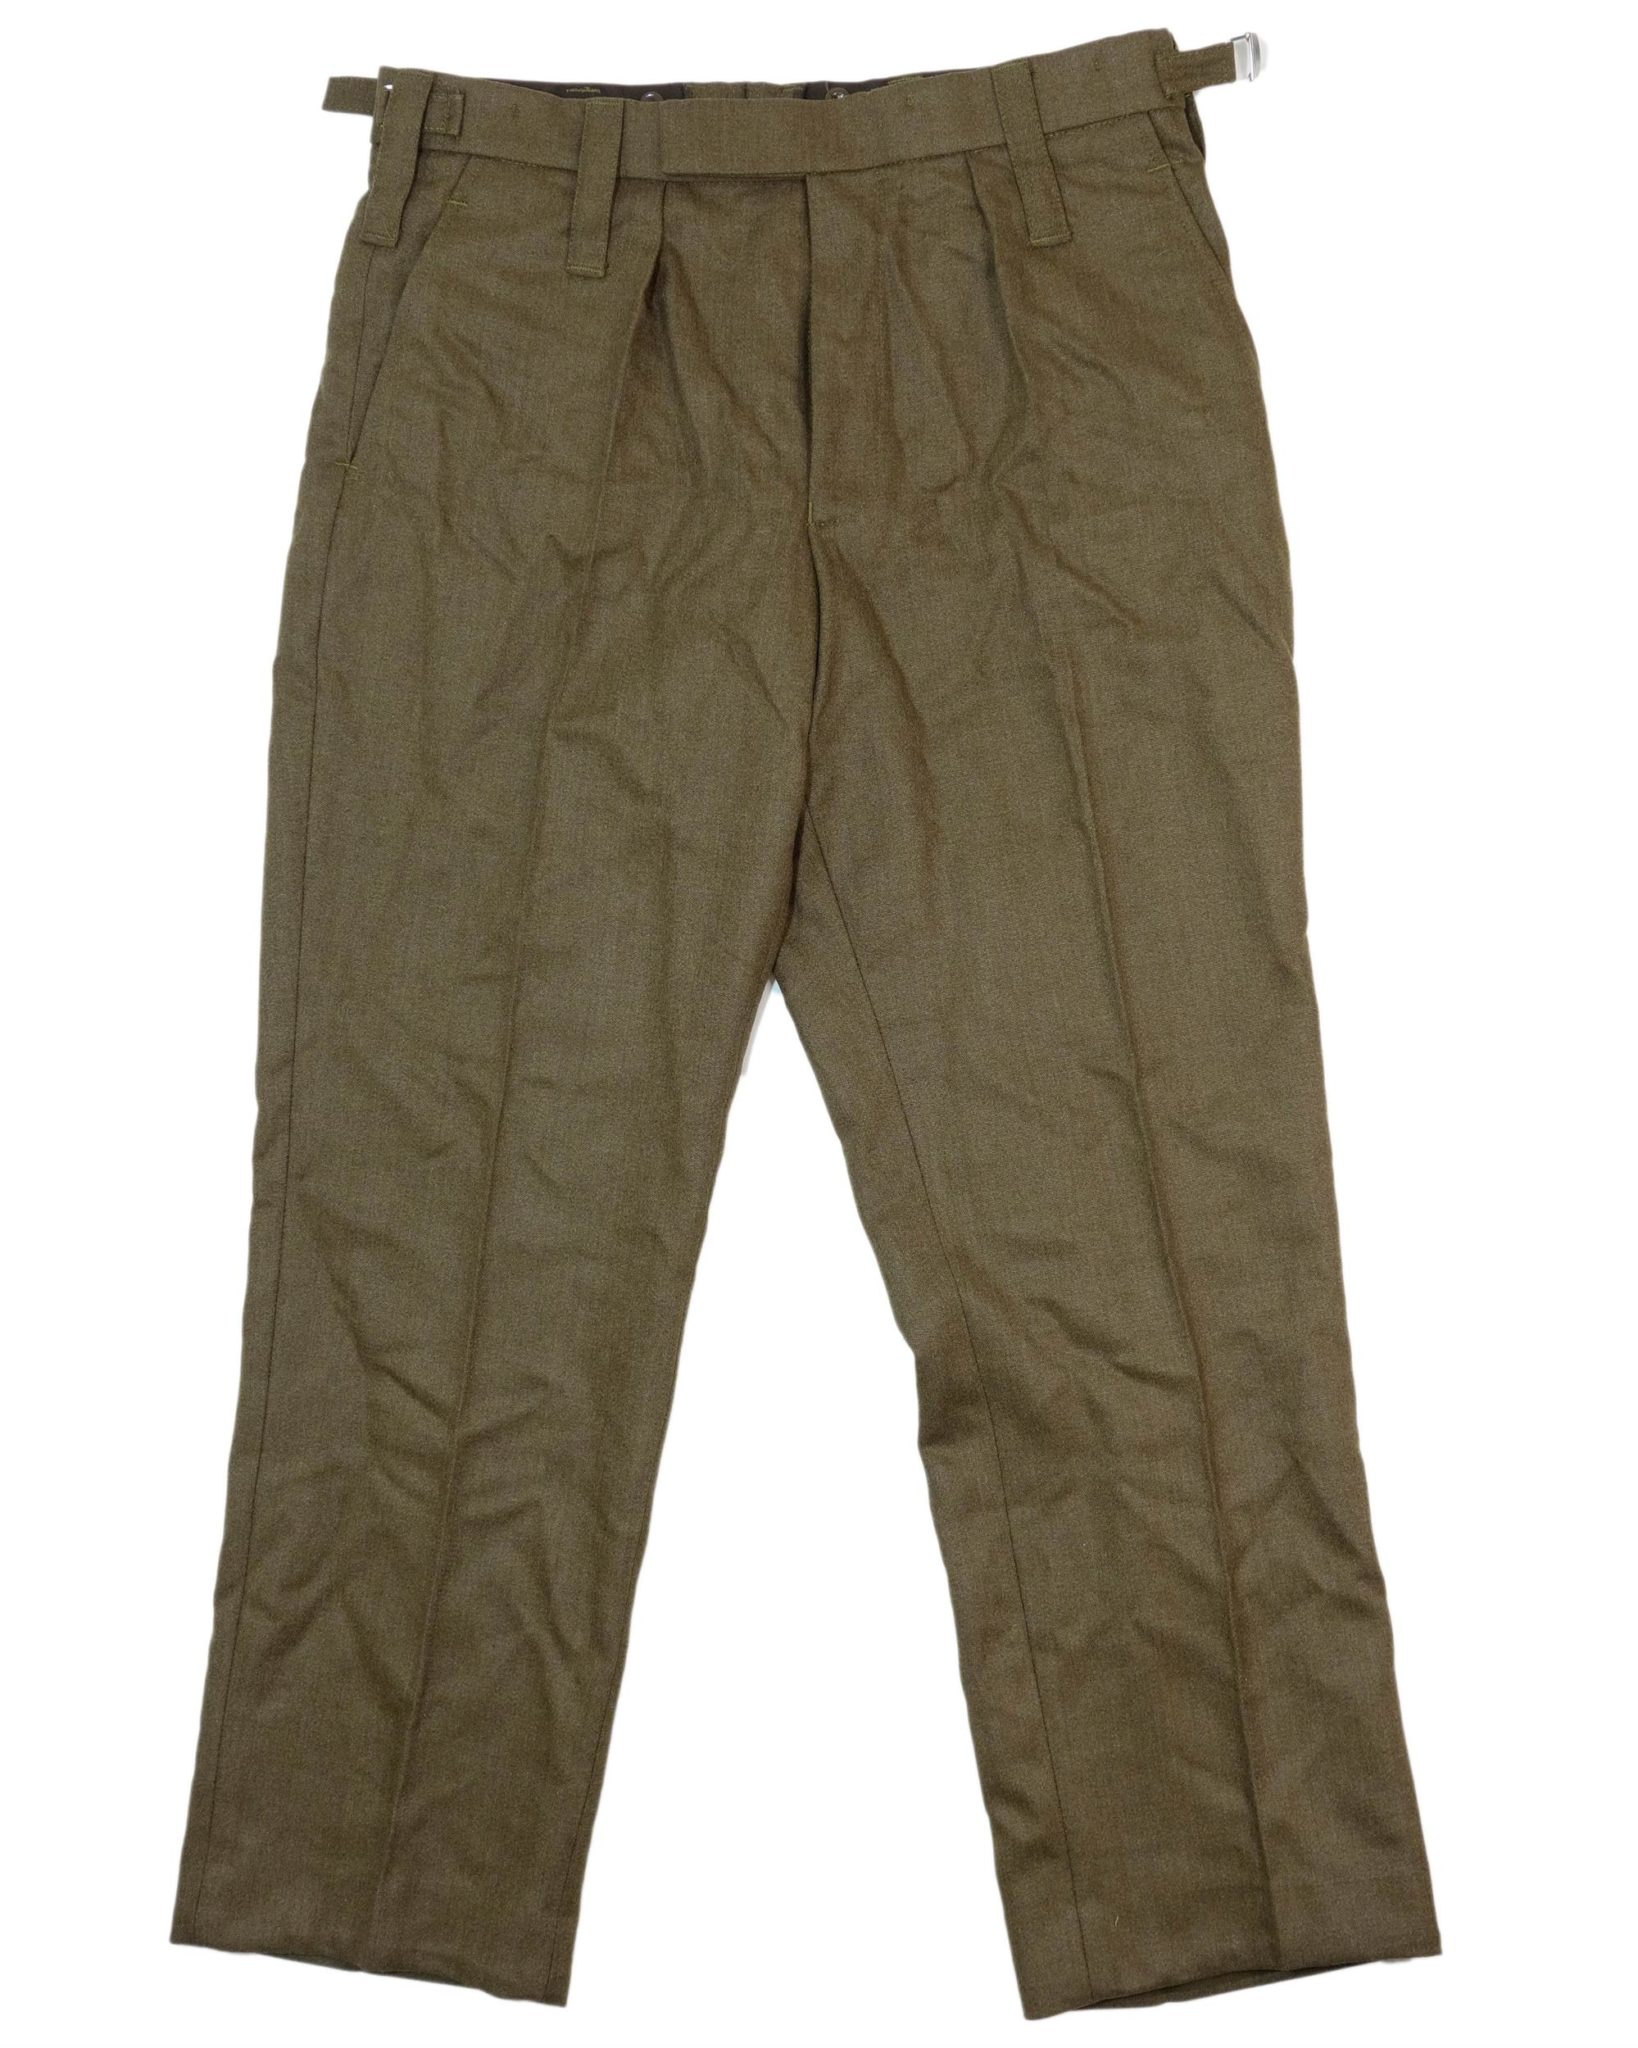 NEW RANGE - British Army Surplus No2 Brown Trousers GRADE 1 - Surplus ...